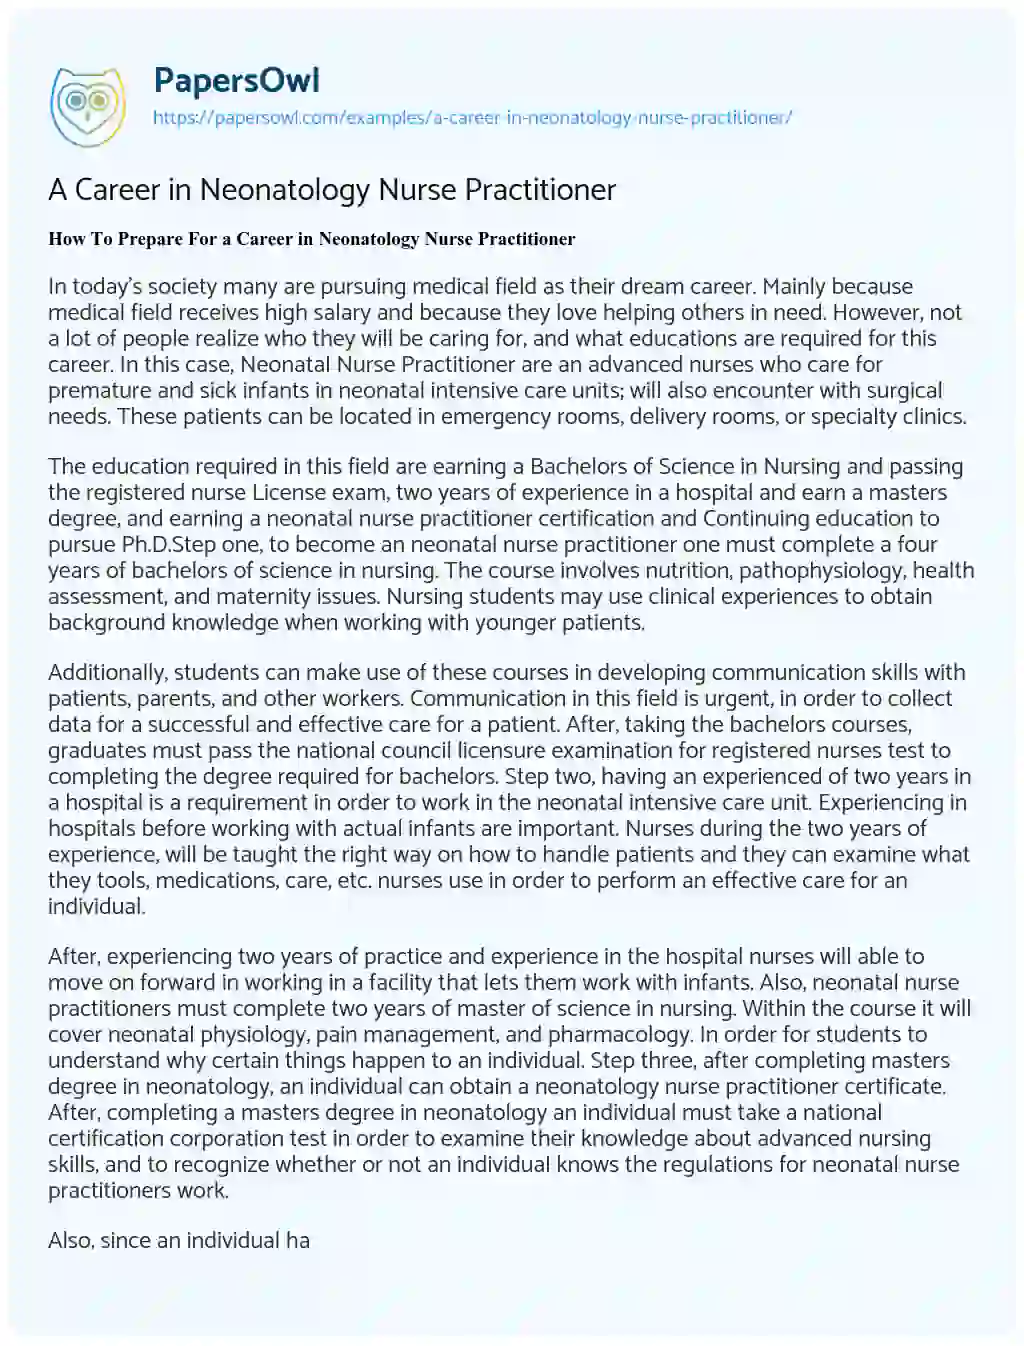 Essay on A Career in Neonatology Nurse Practitioner